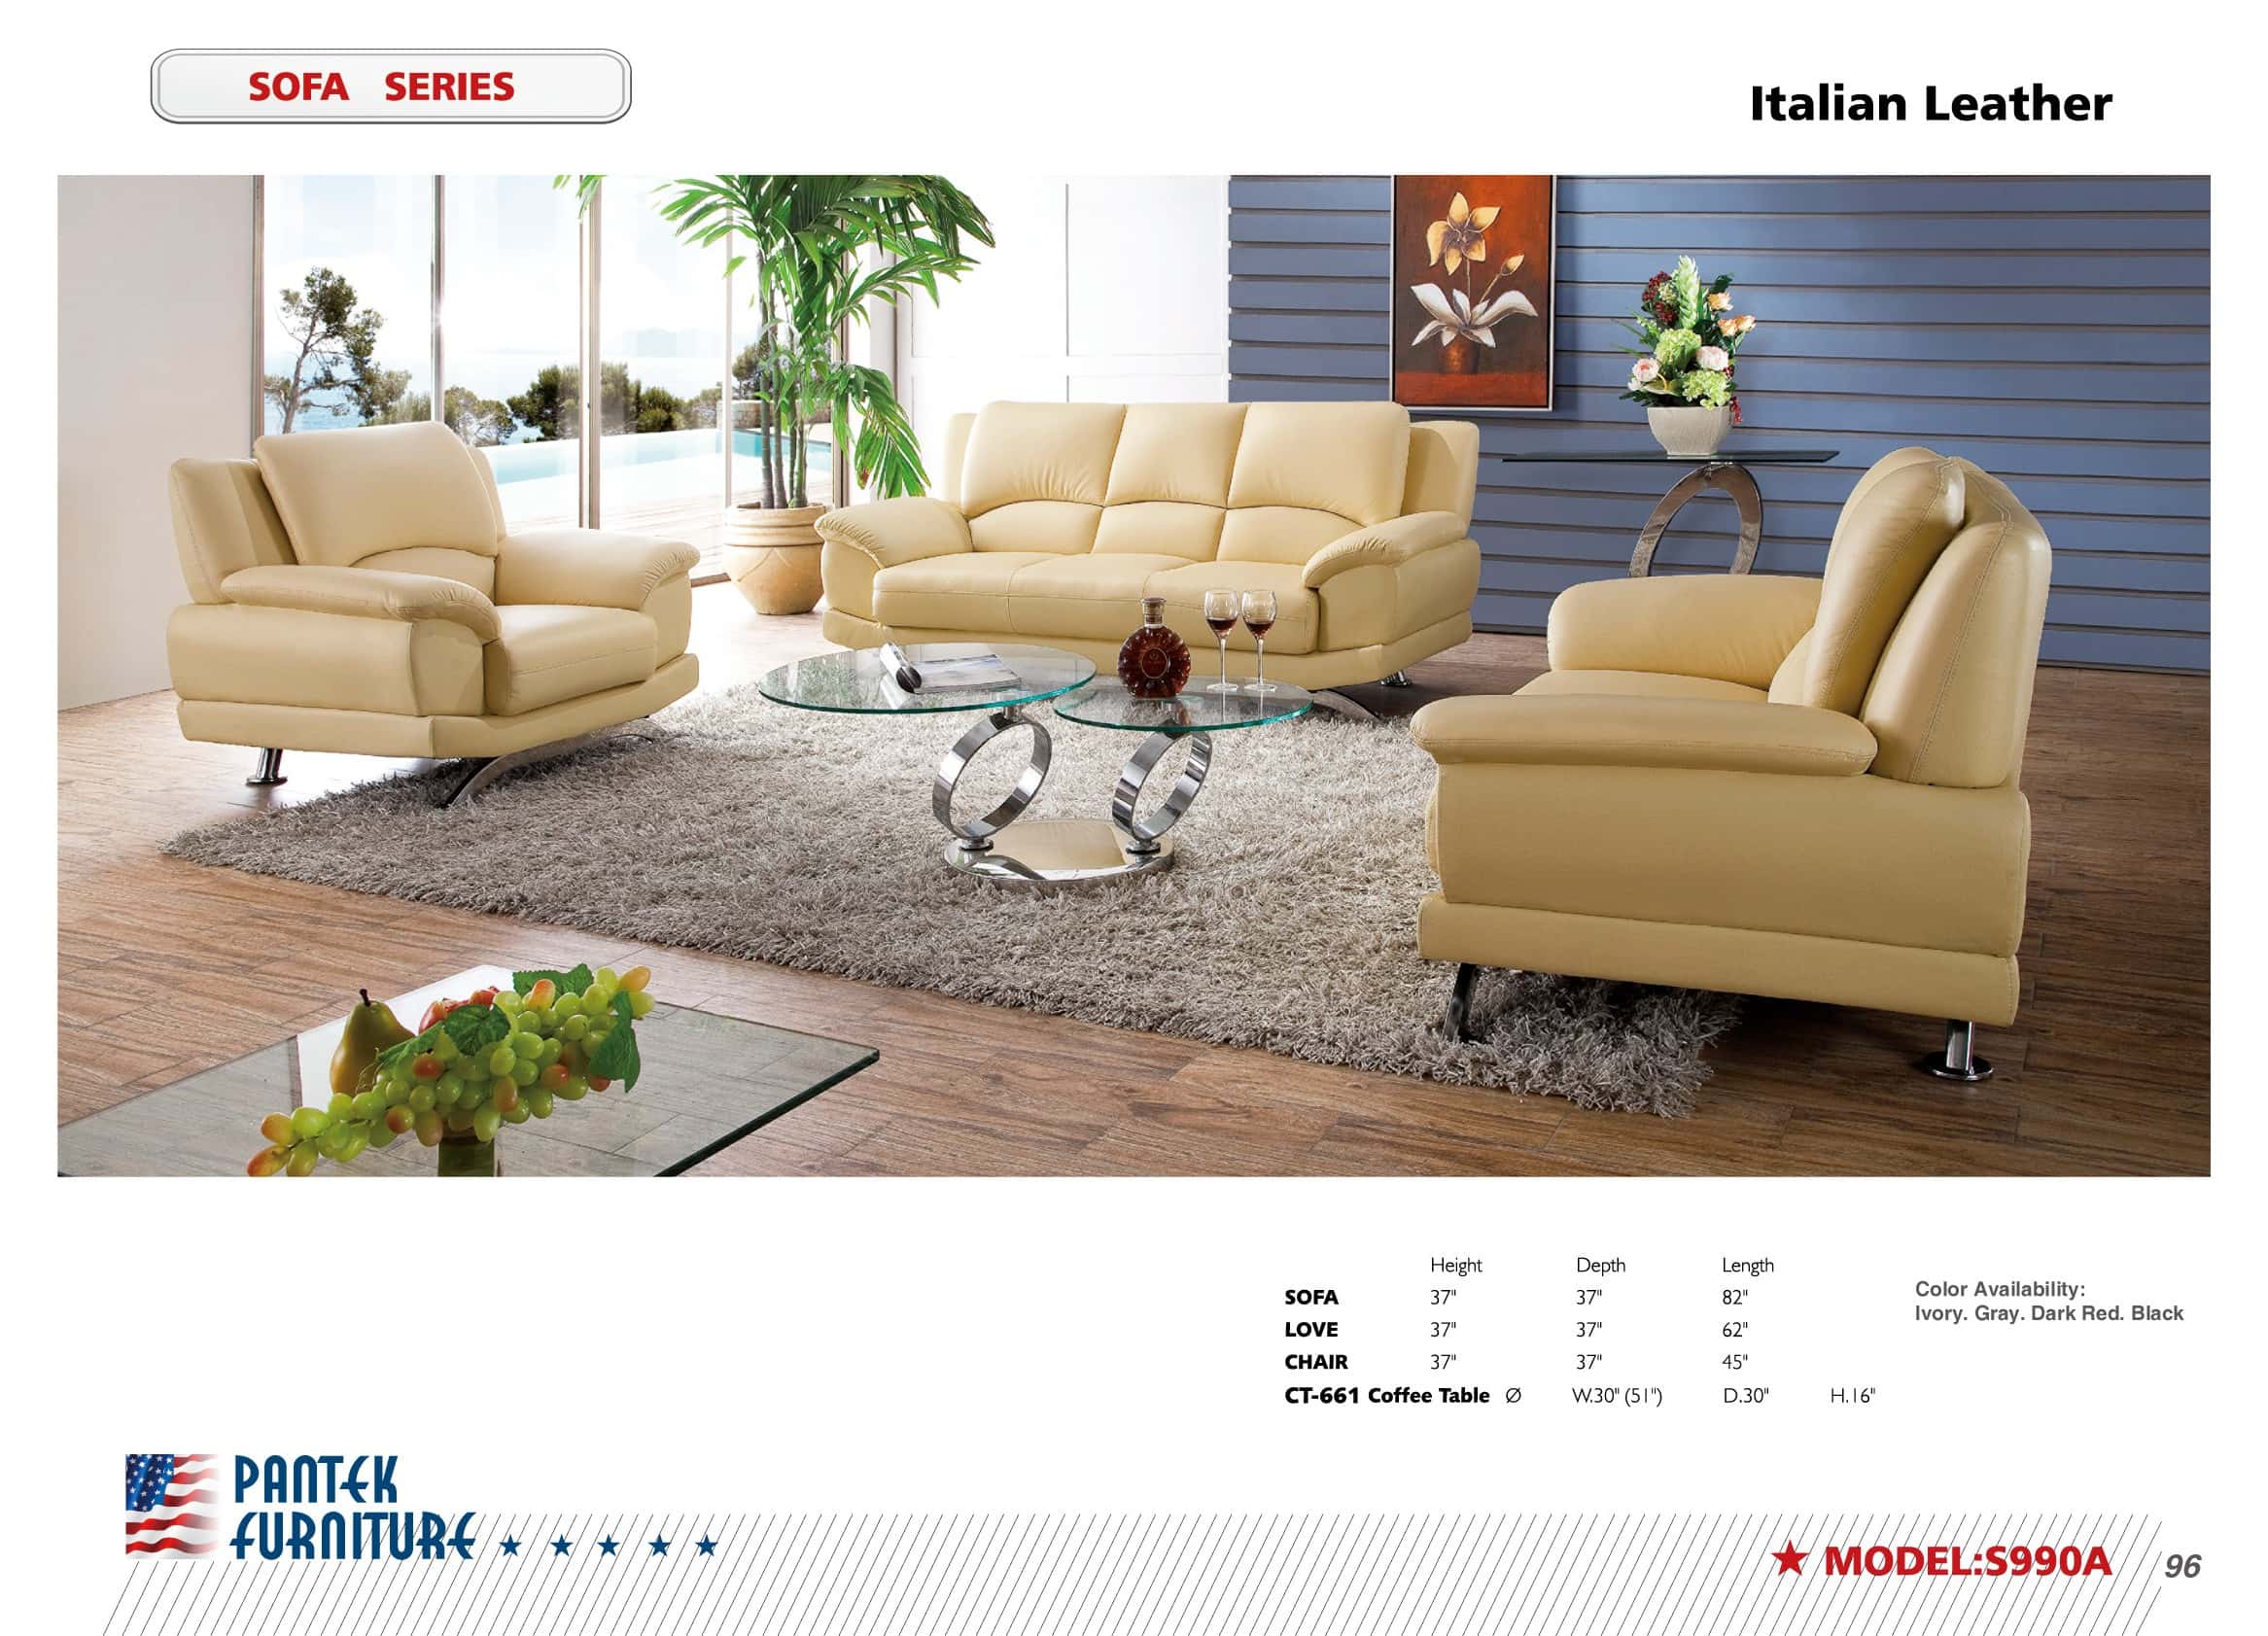 SF 990 Italian Ivory Leather Sofa, Loveseat & Chair Set by Pantek Furniture